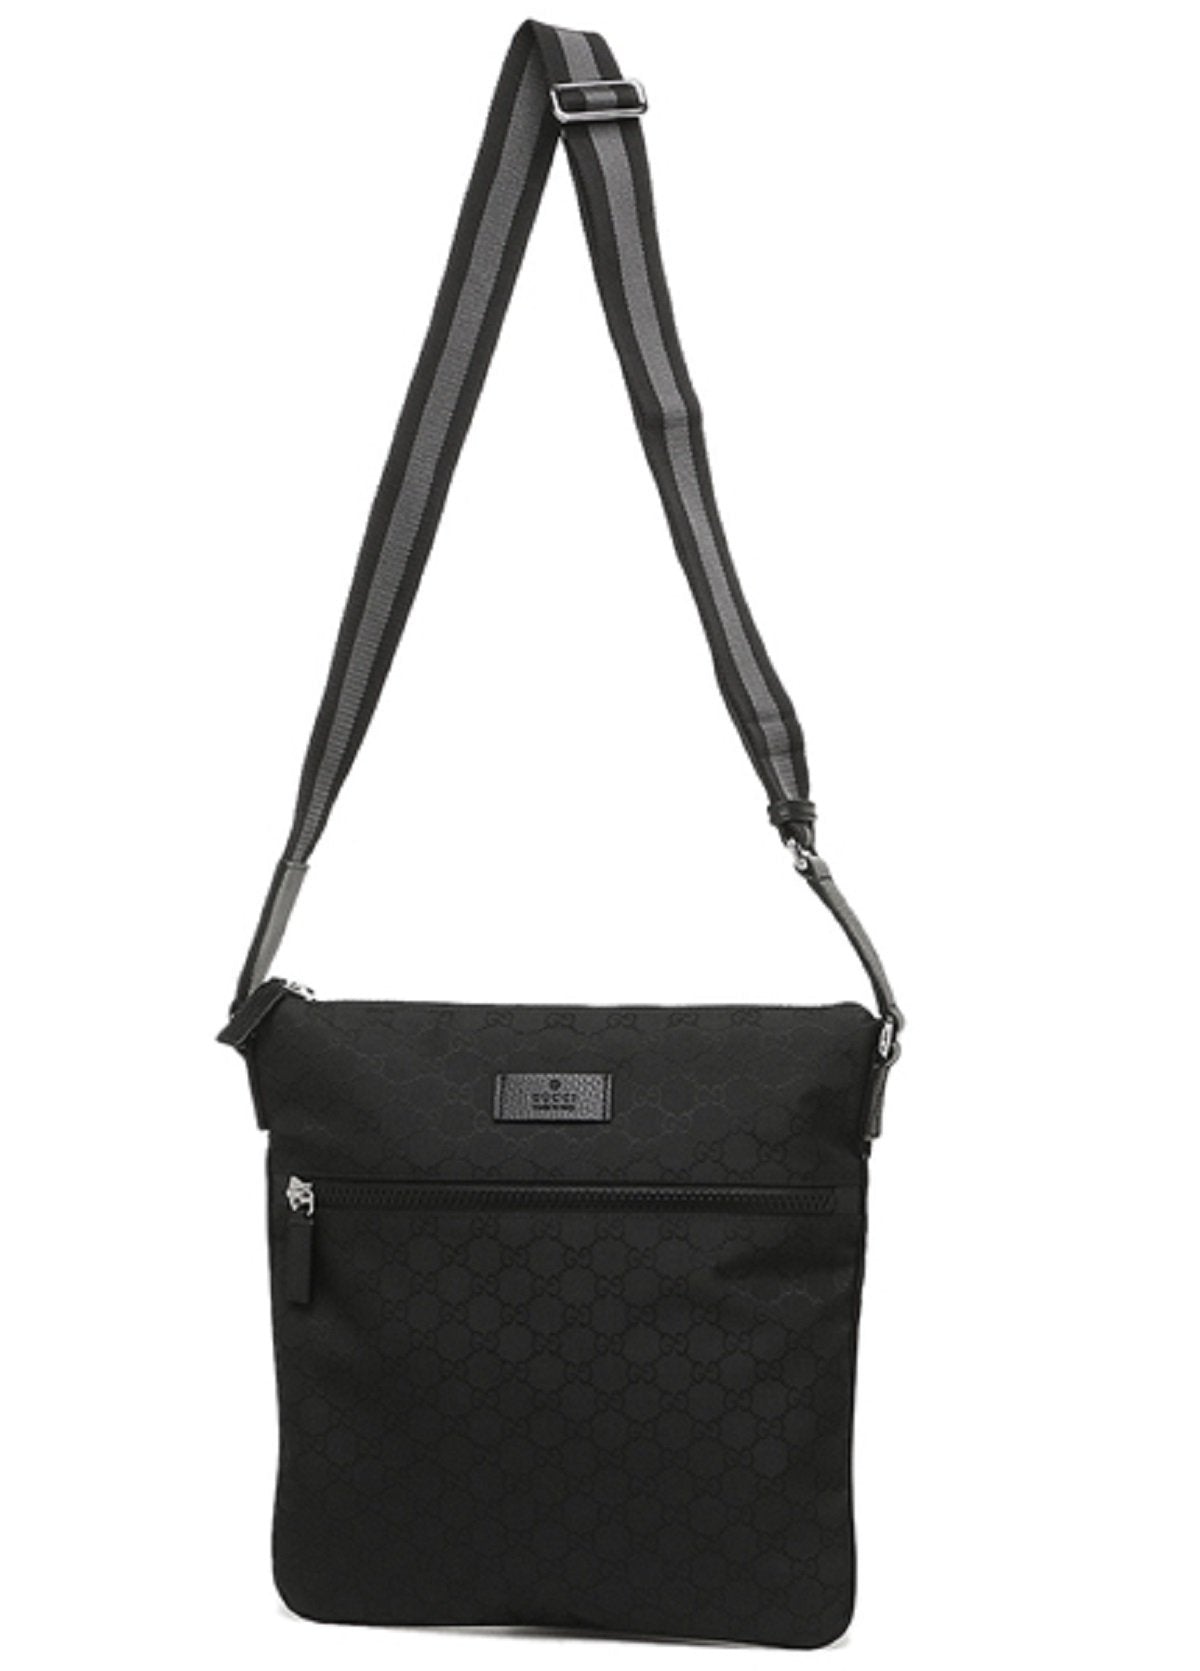 Gucci Unisex GG Guccissima Web Black Canvas Messenger Bag Crossbody